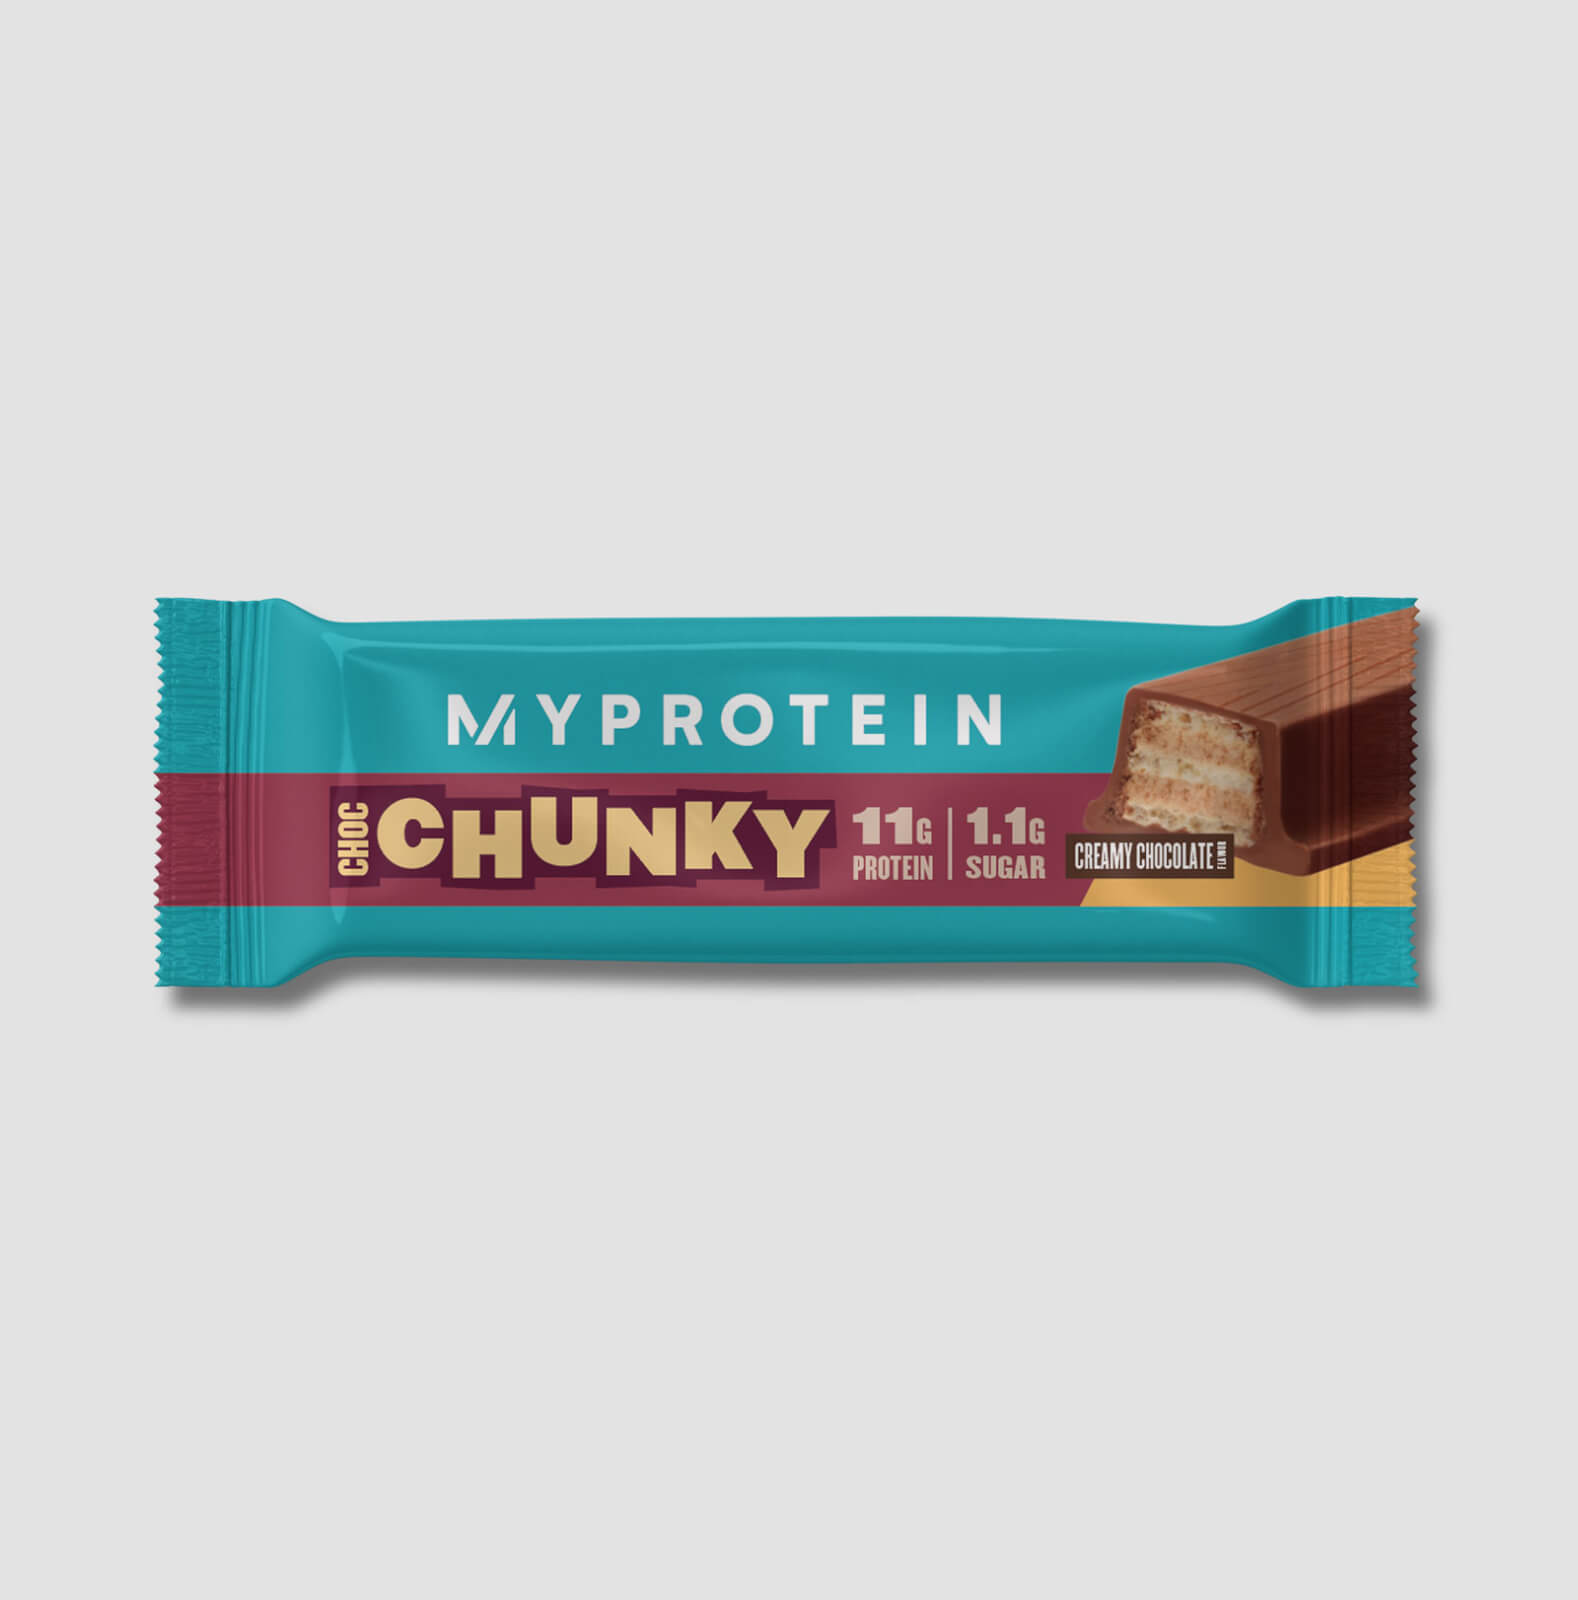 Proteinski Čokoladni Chunky (Uzorak) - 37.2g - Čokolada